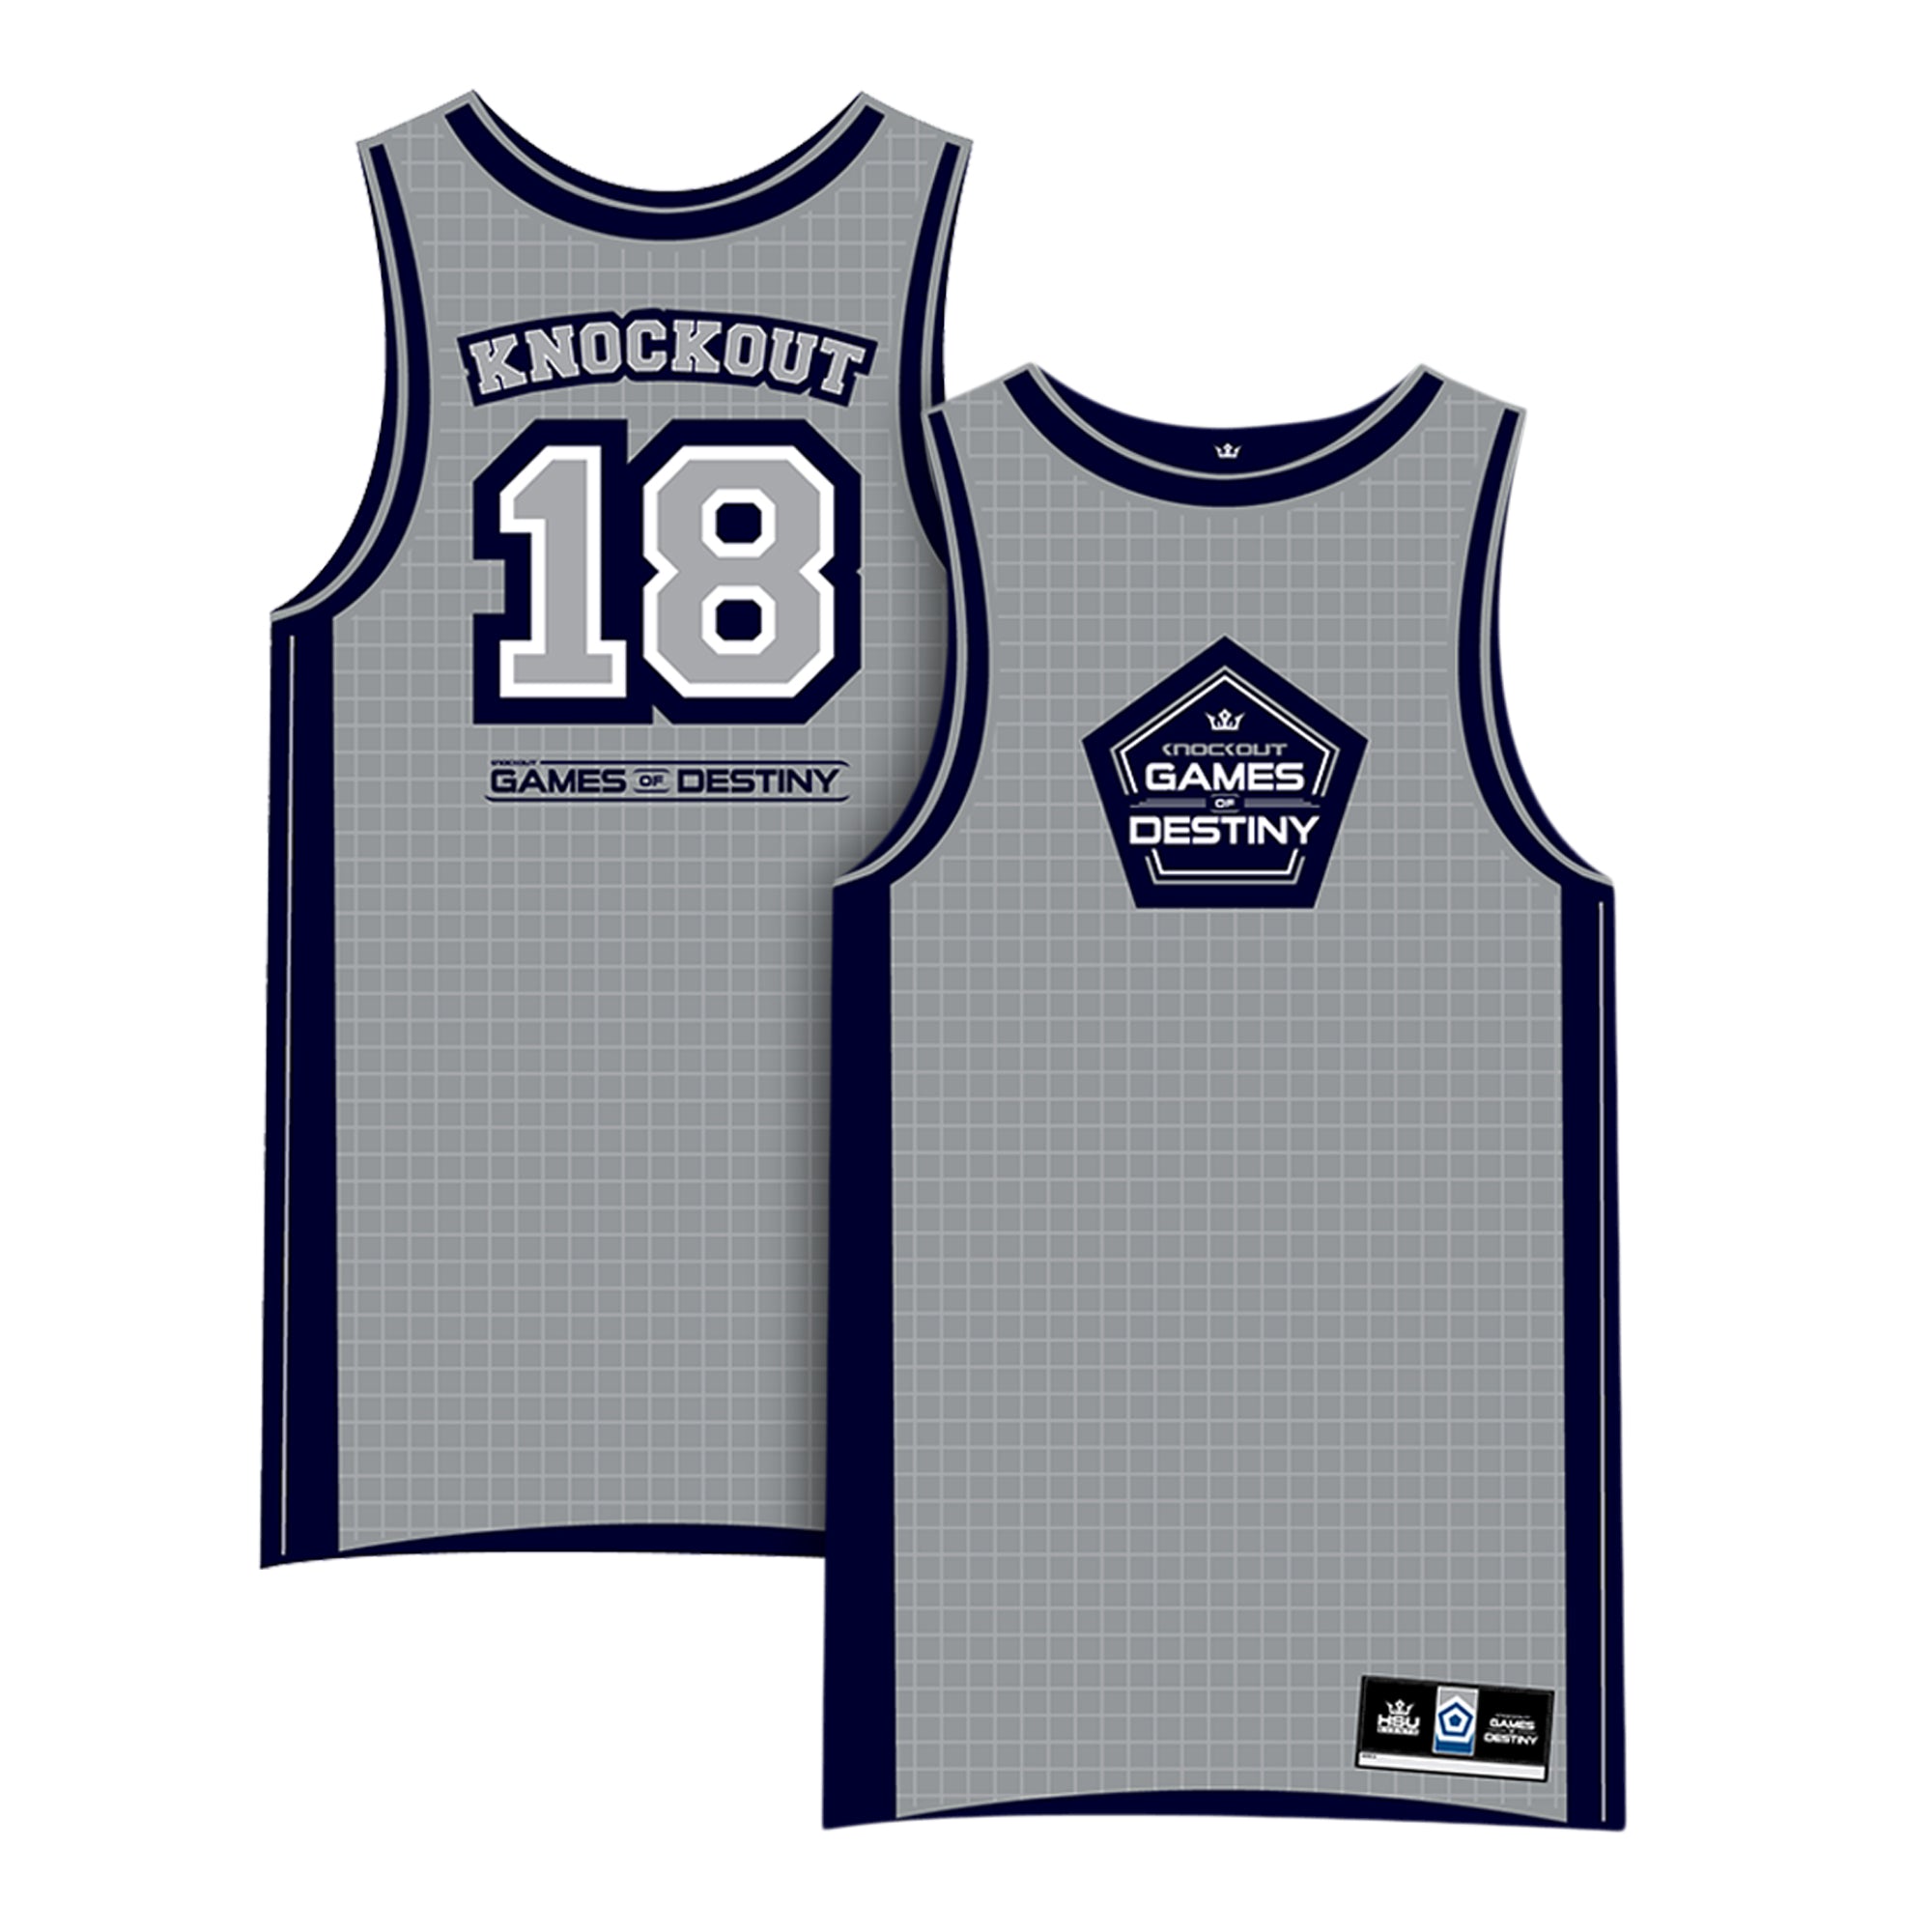 grey basketball jersey design